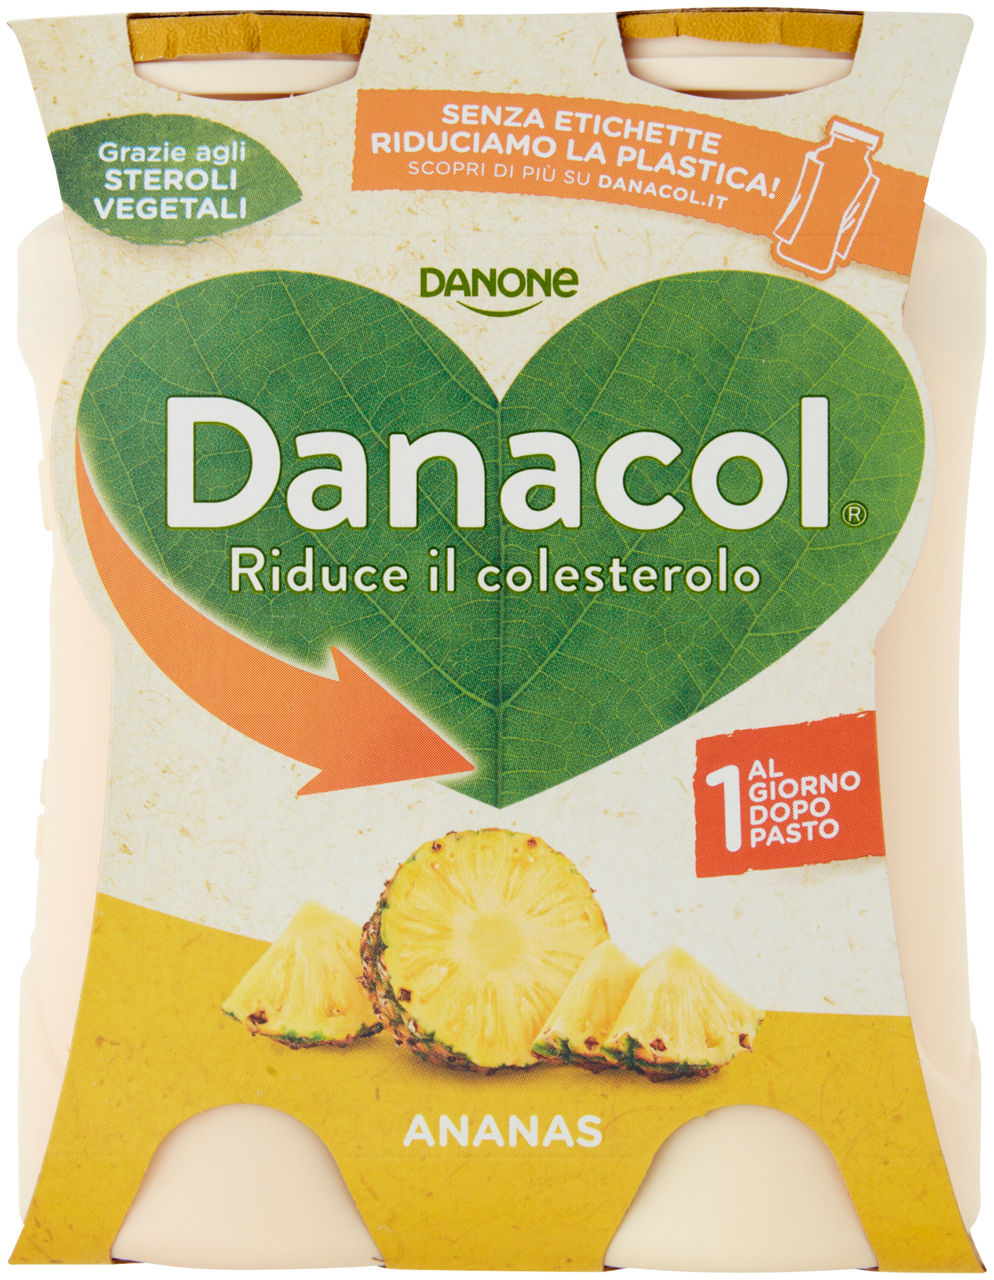 Danacol danone anticolesterolo ananas btg 4x100g